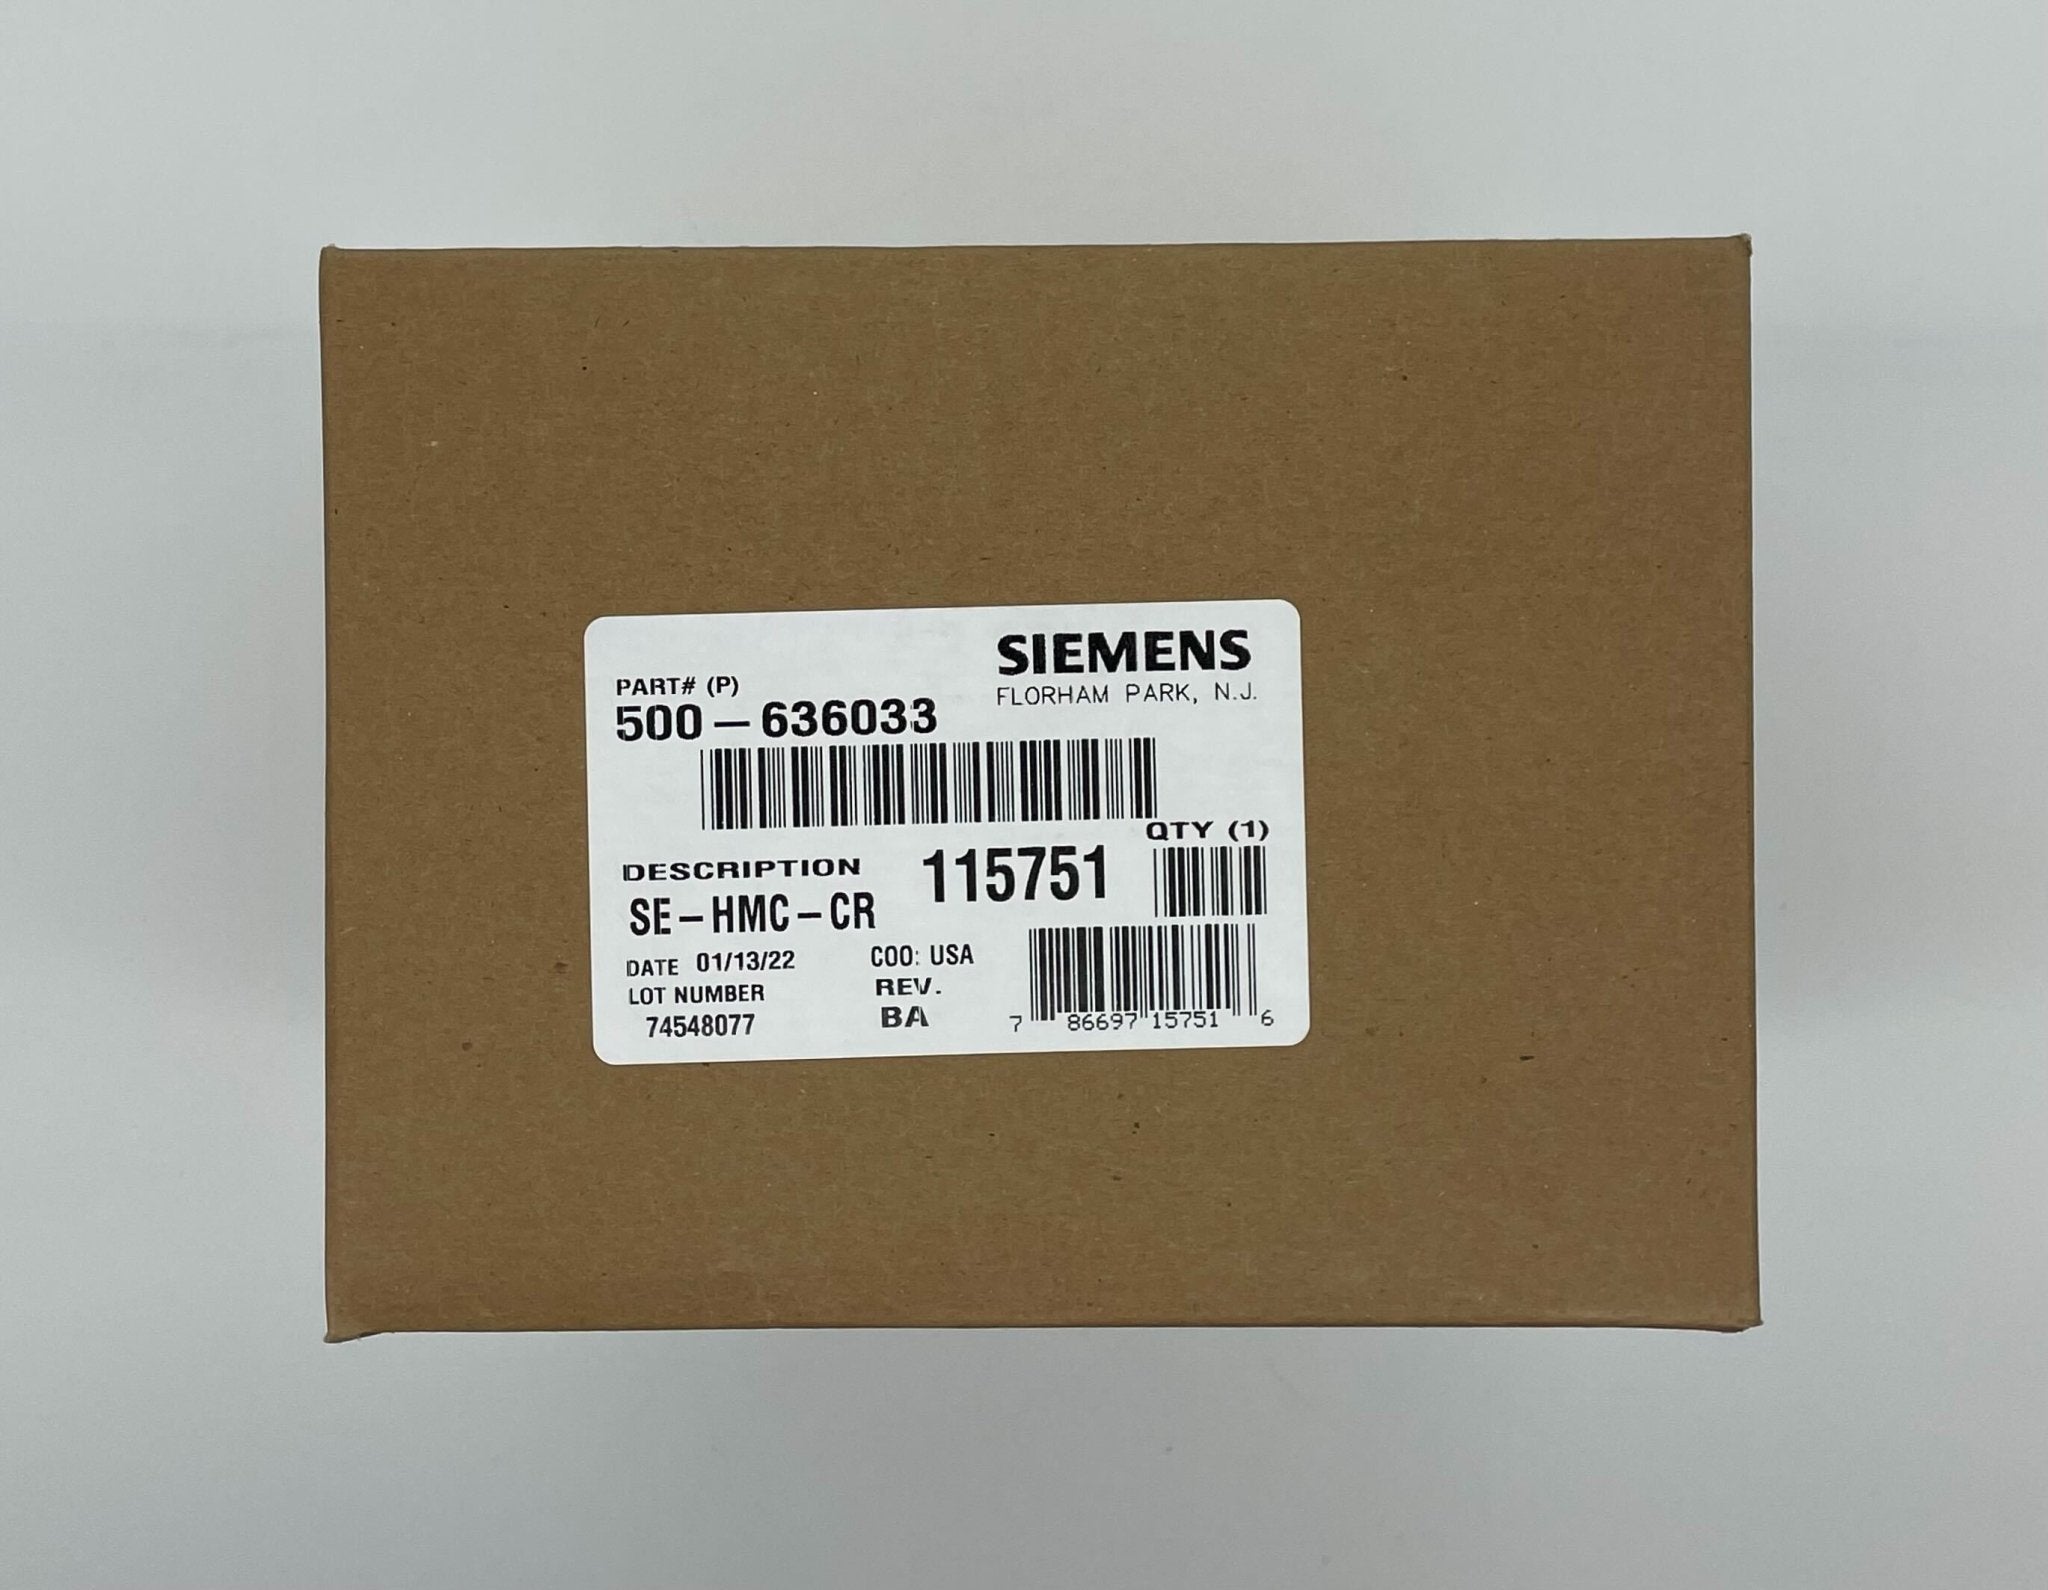 Siemens SE-HMC-CR - The Fire Alarm Supplier